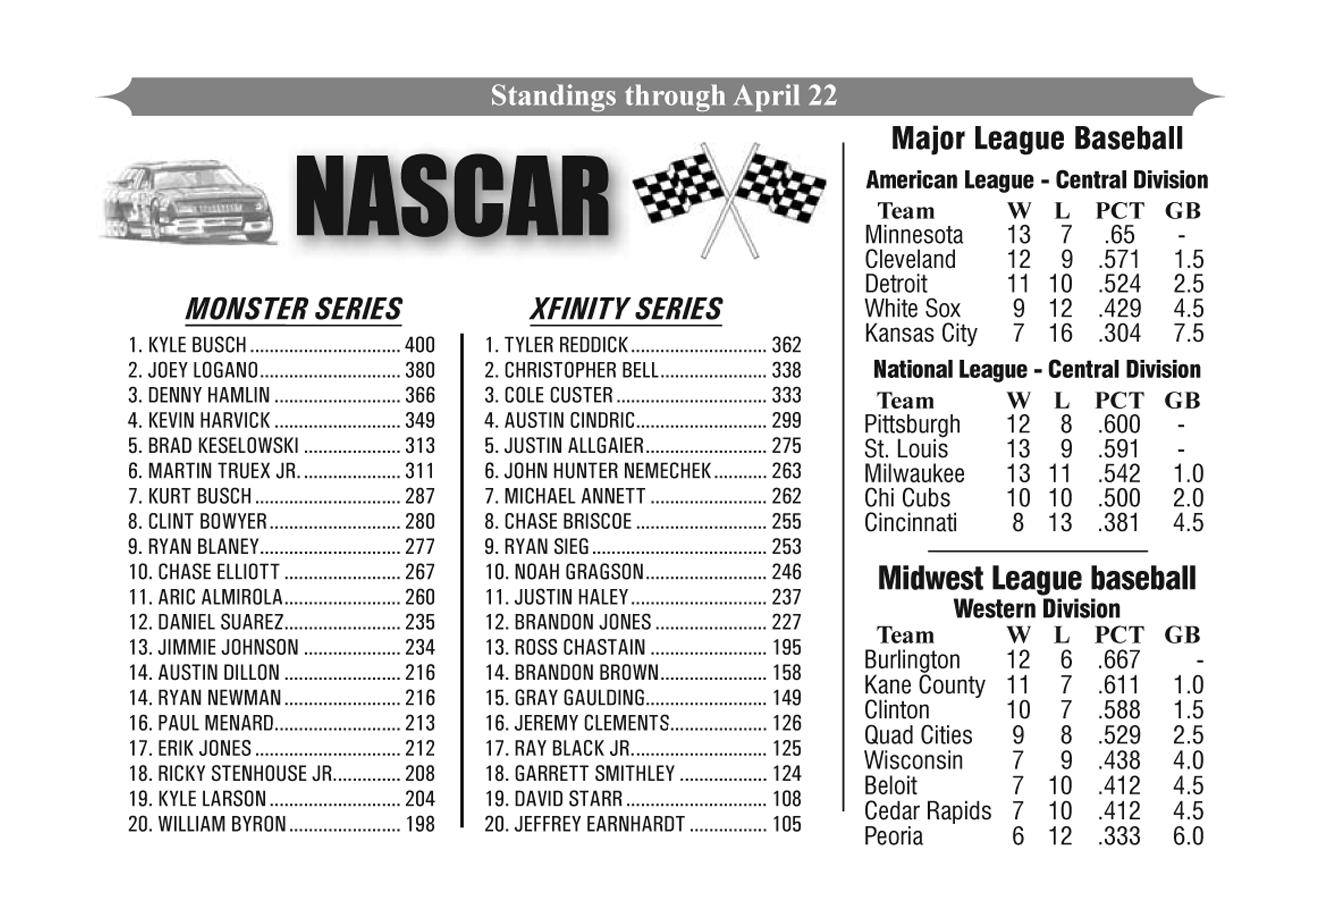 NASCAR and Baseball Standings Through April 22, 2019